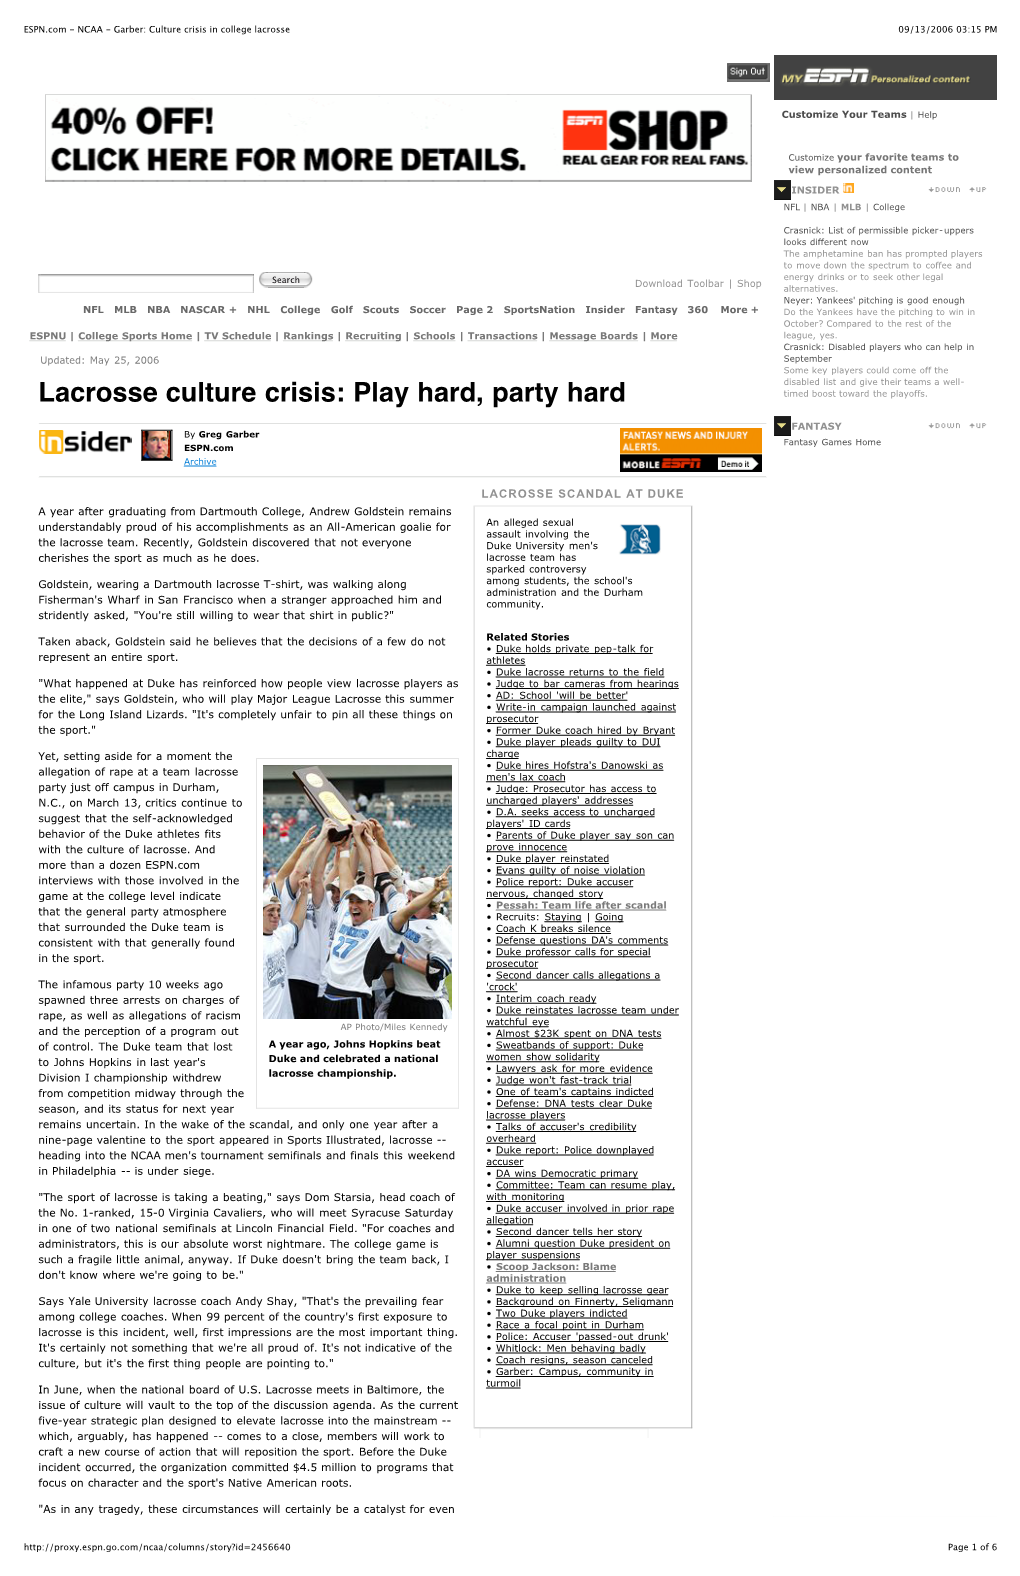 ESPN.Com - NCAA - Garber: Culture Crisis in College Lacrosse 09/13/2006 03:15 PM